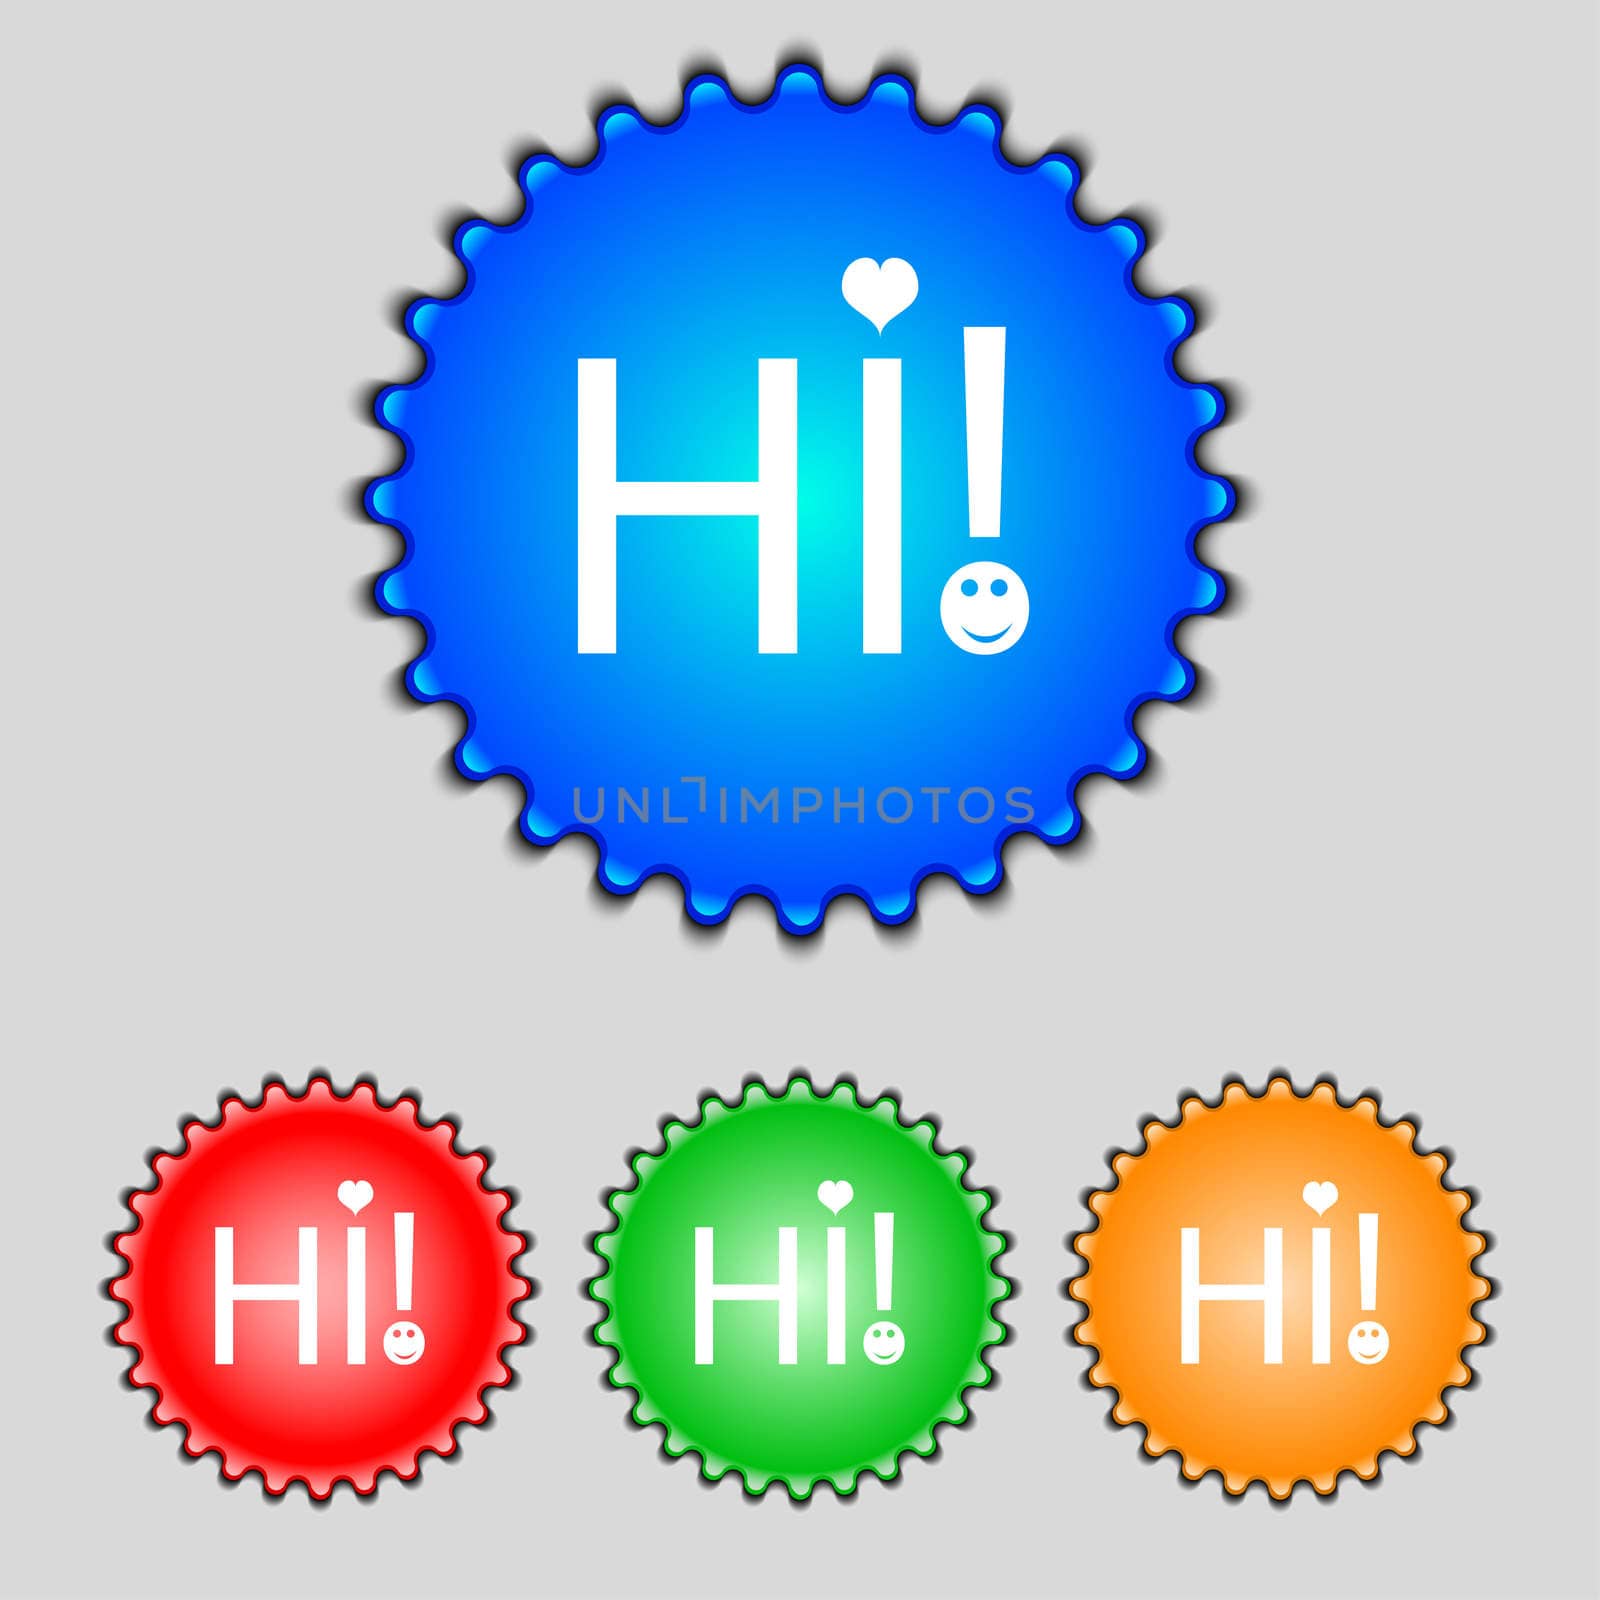 HI sign icon. India translation symbol. Set of colored buttons. illustration